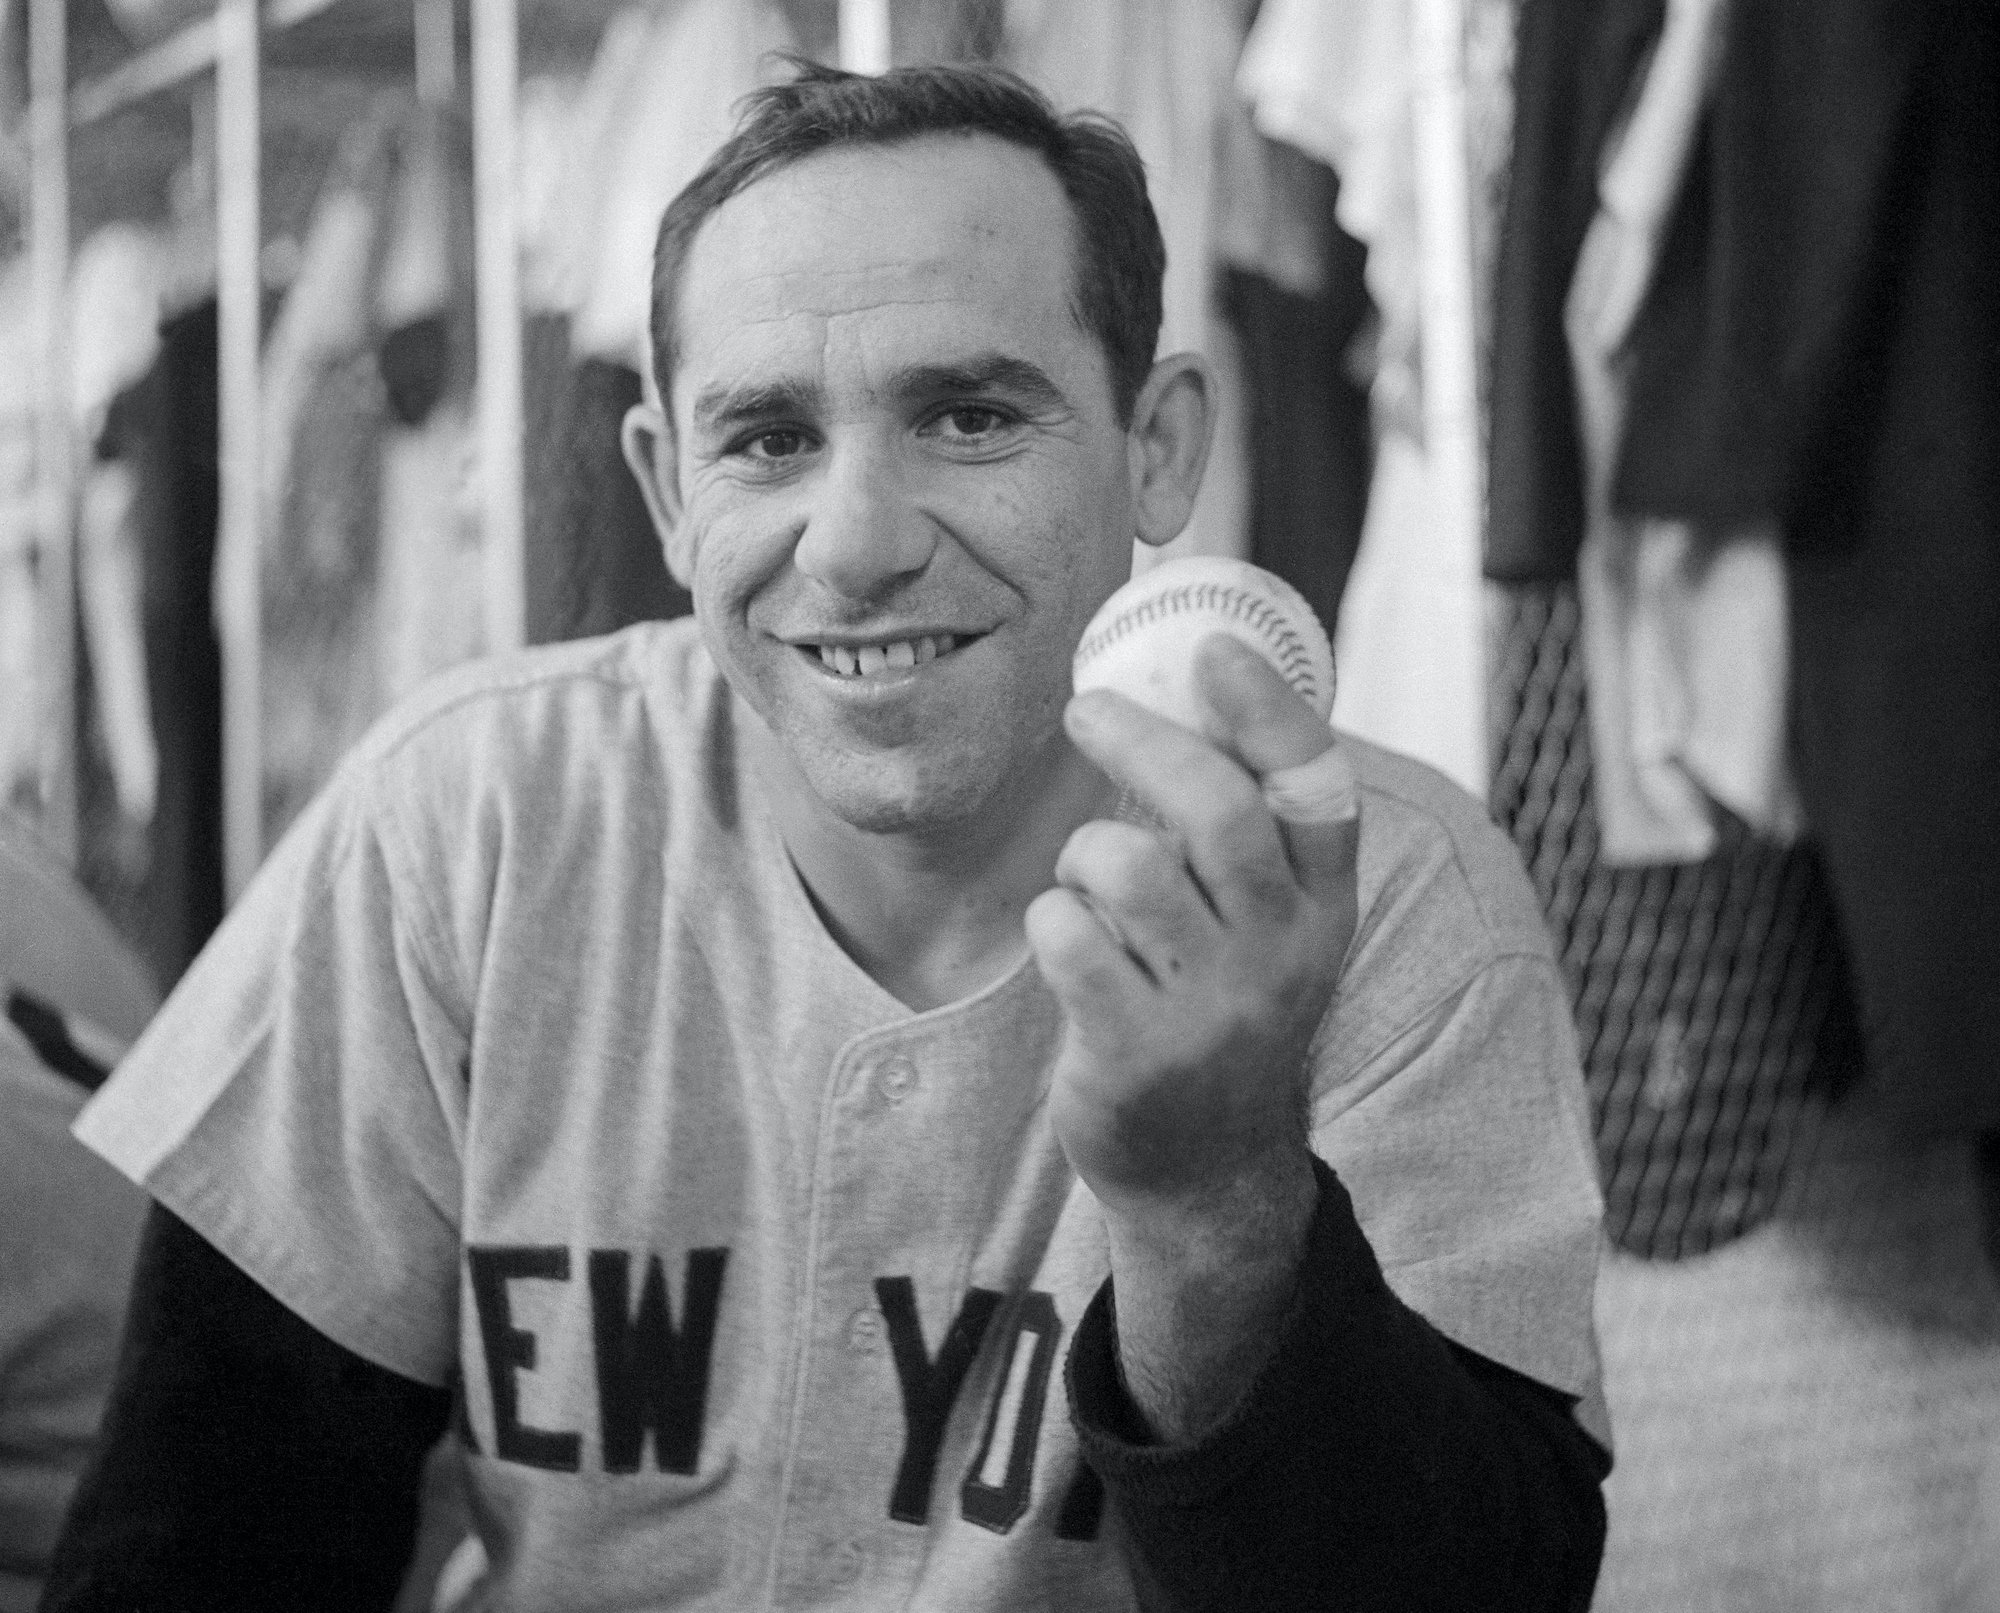 Yogi Berra smiling in his Yankee uniform, holding a baseball, in black and white